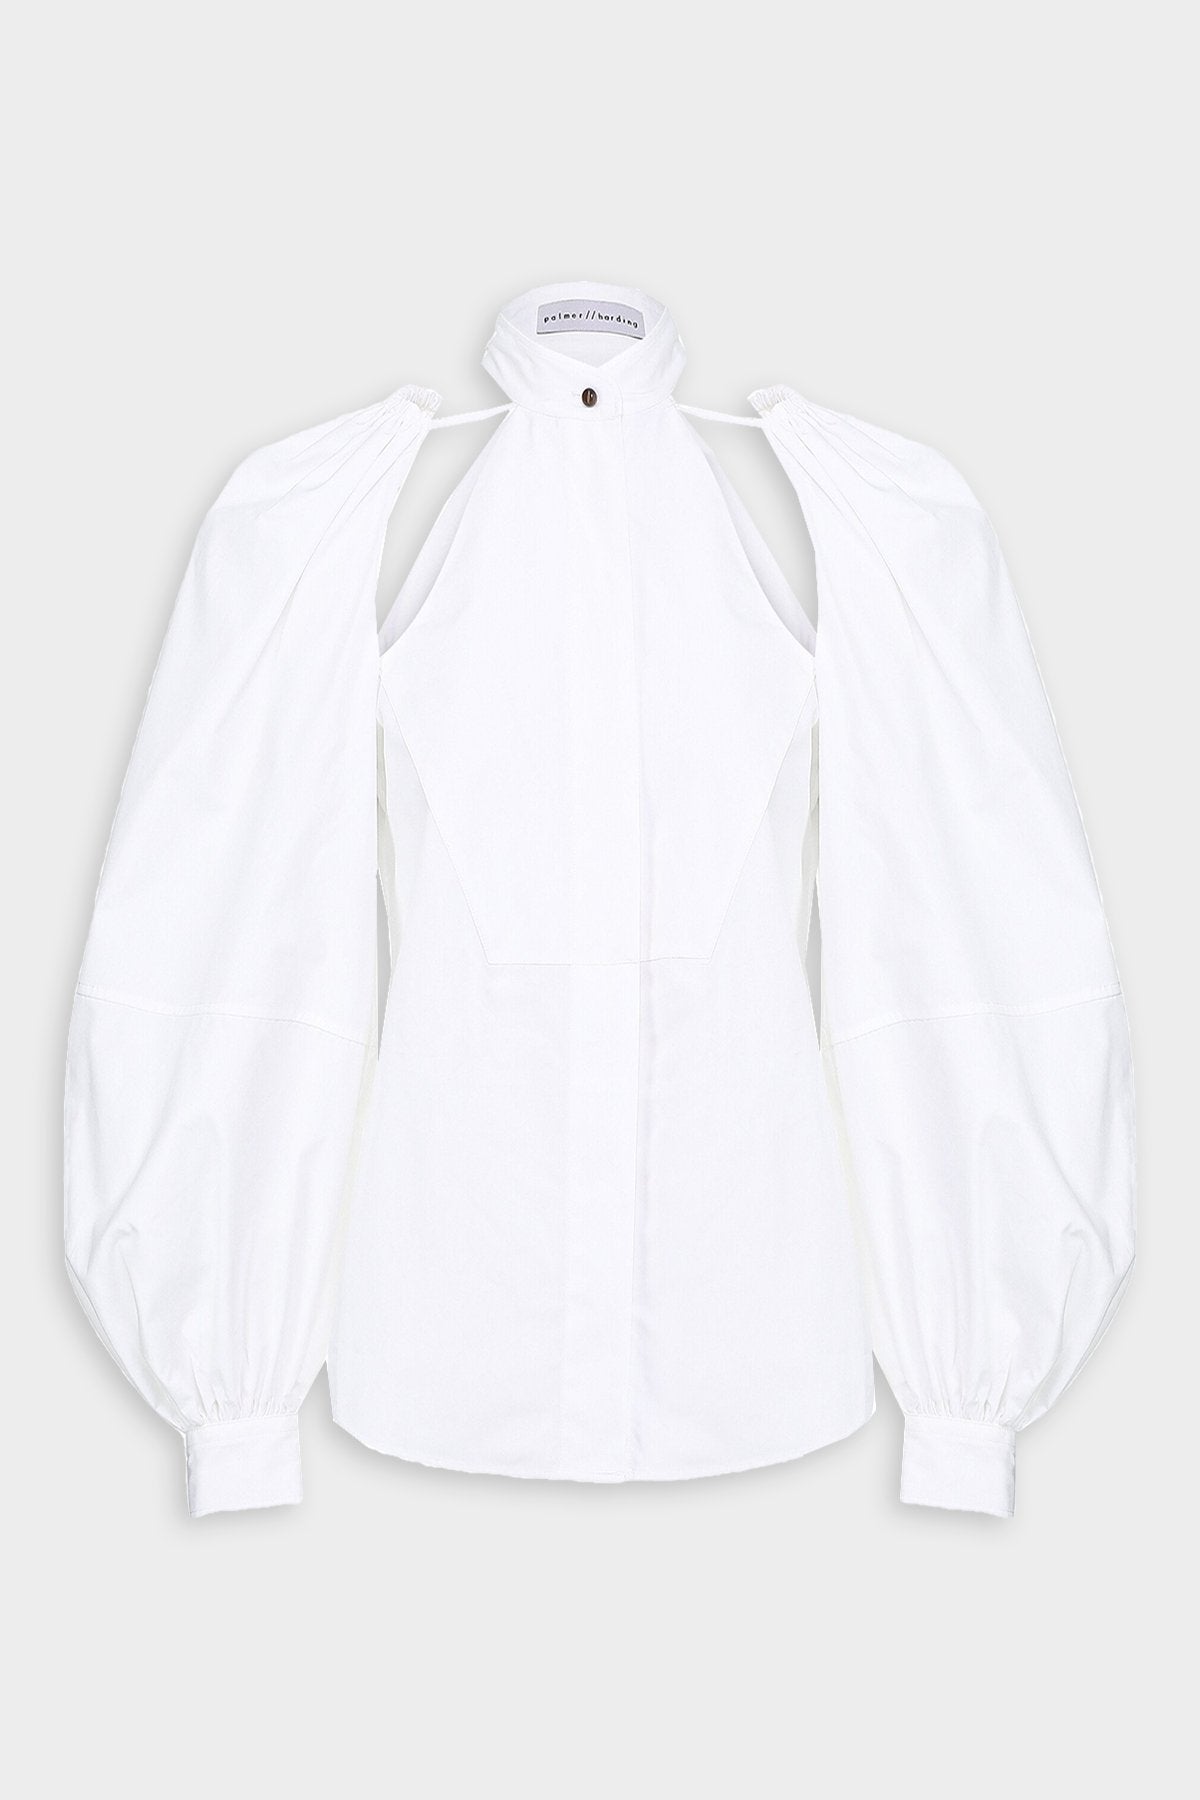 Entwine Shirt in White - shop-olivia.com